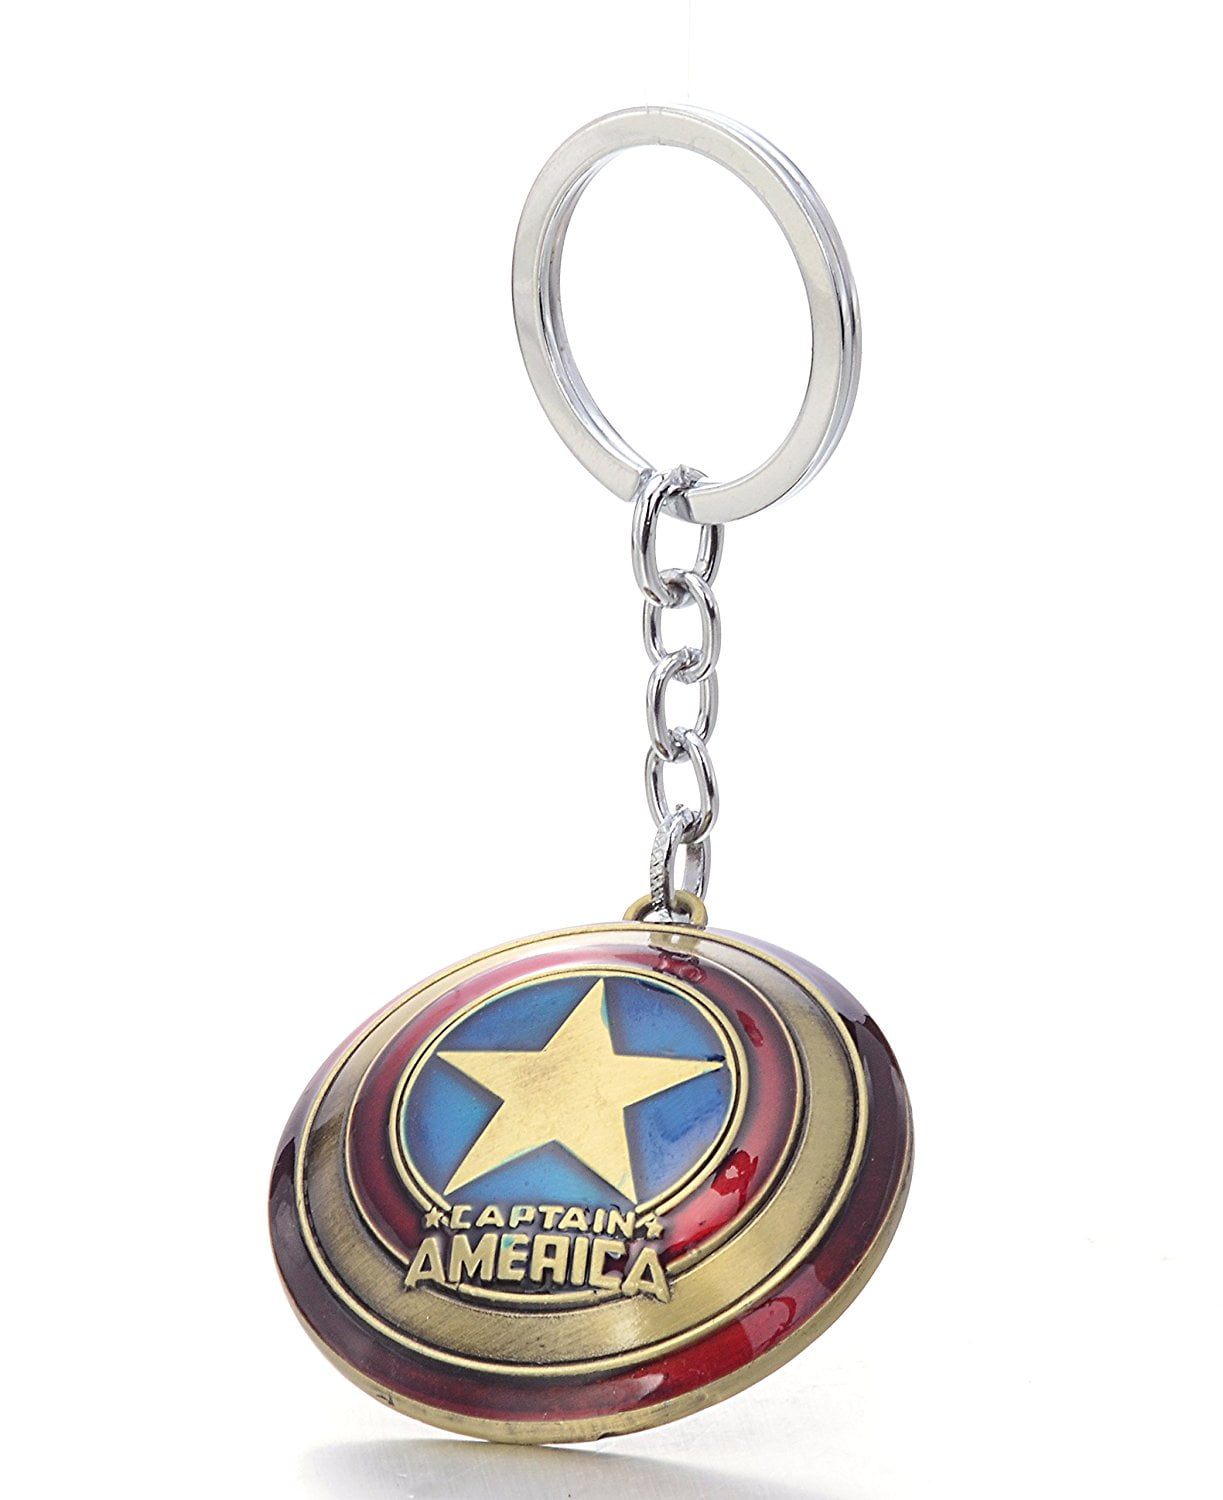 Key Tag Marvel Avengers Captain America Rotatable Shield keychain keyring 